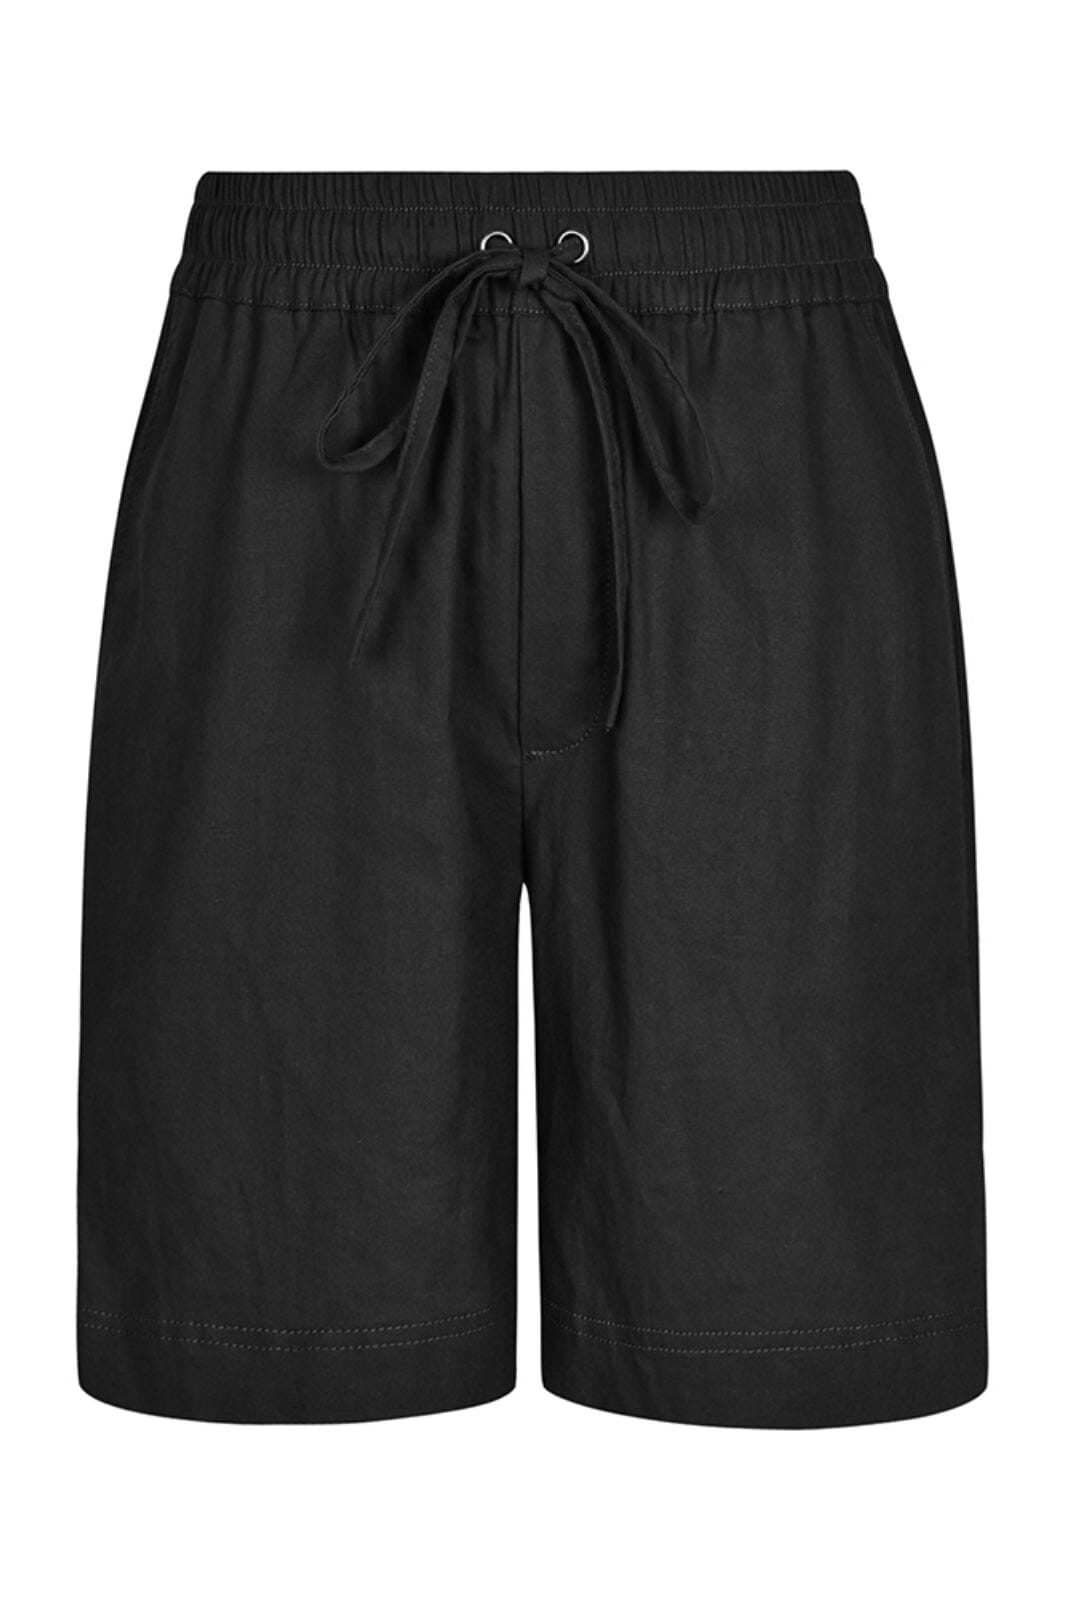 MbyM - Fidelina-M - Black Shorts 